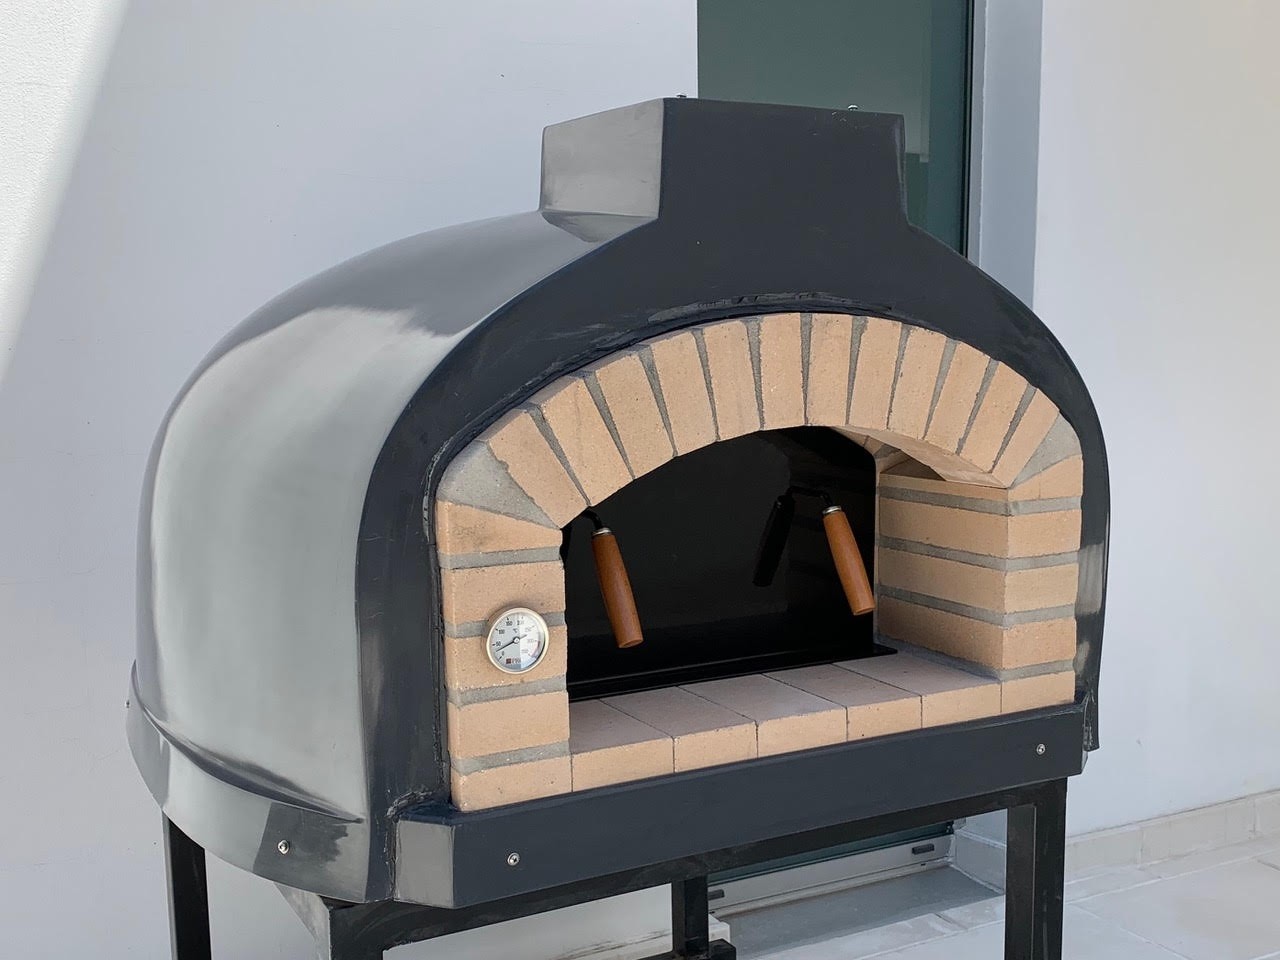 domesticeren Het hotel Luchten Portuguese Brick Pizza Oven in Fiberglass Shell